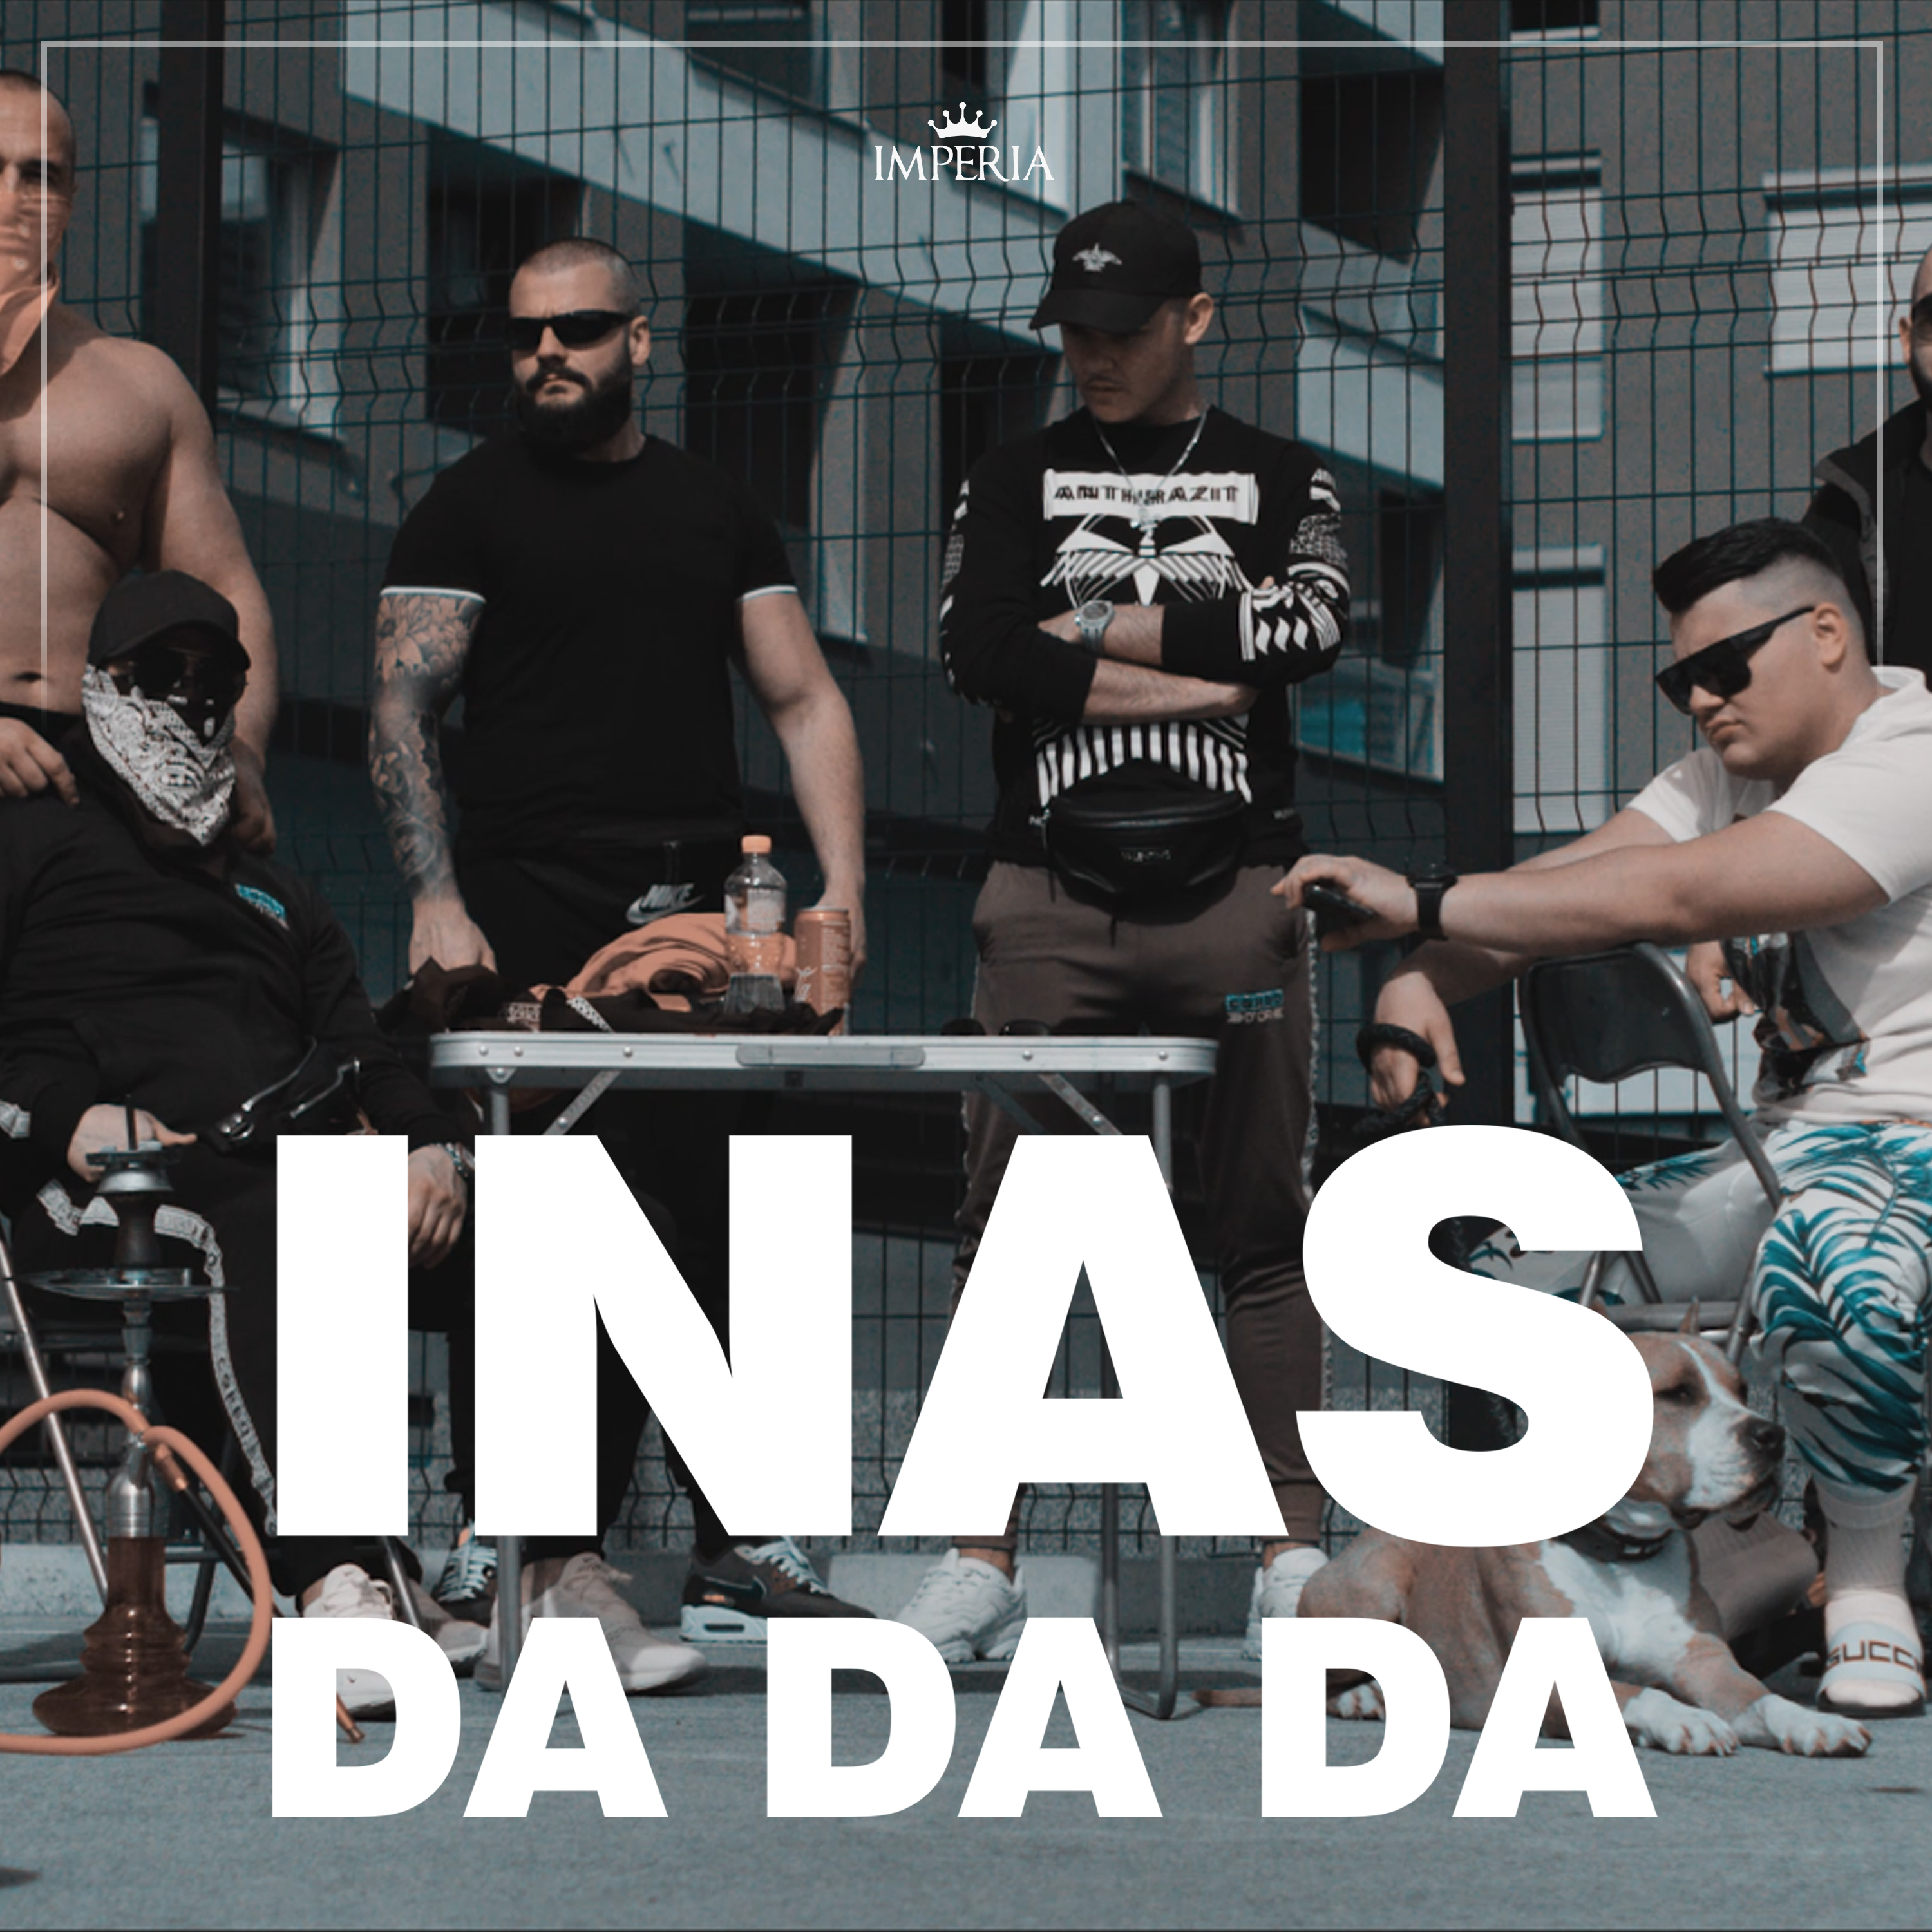 INAS - Da da da - Listen on Spotify, Deezer, YouTube, Google Play Music and Buy on Amazon, iTunes Google Play | EMDC Network